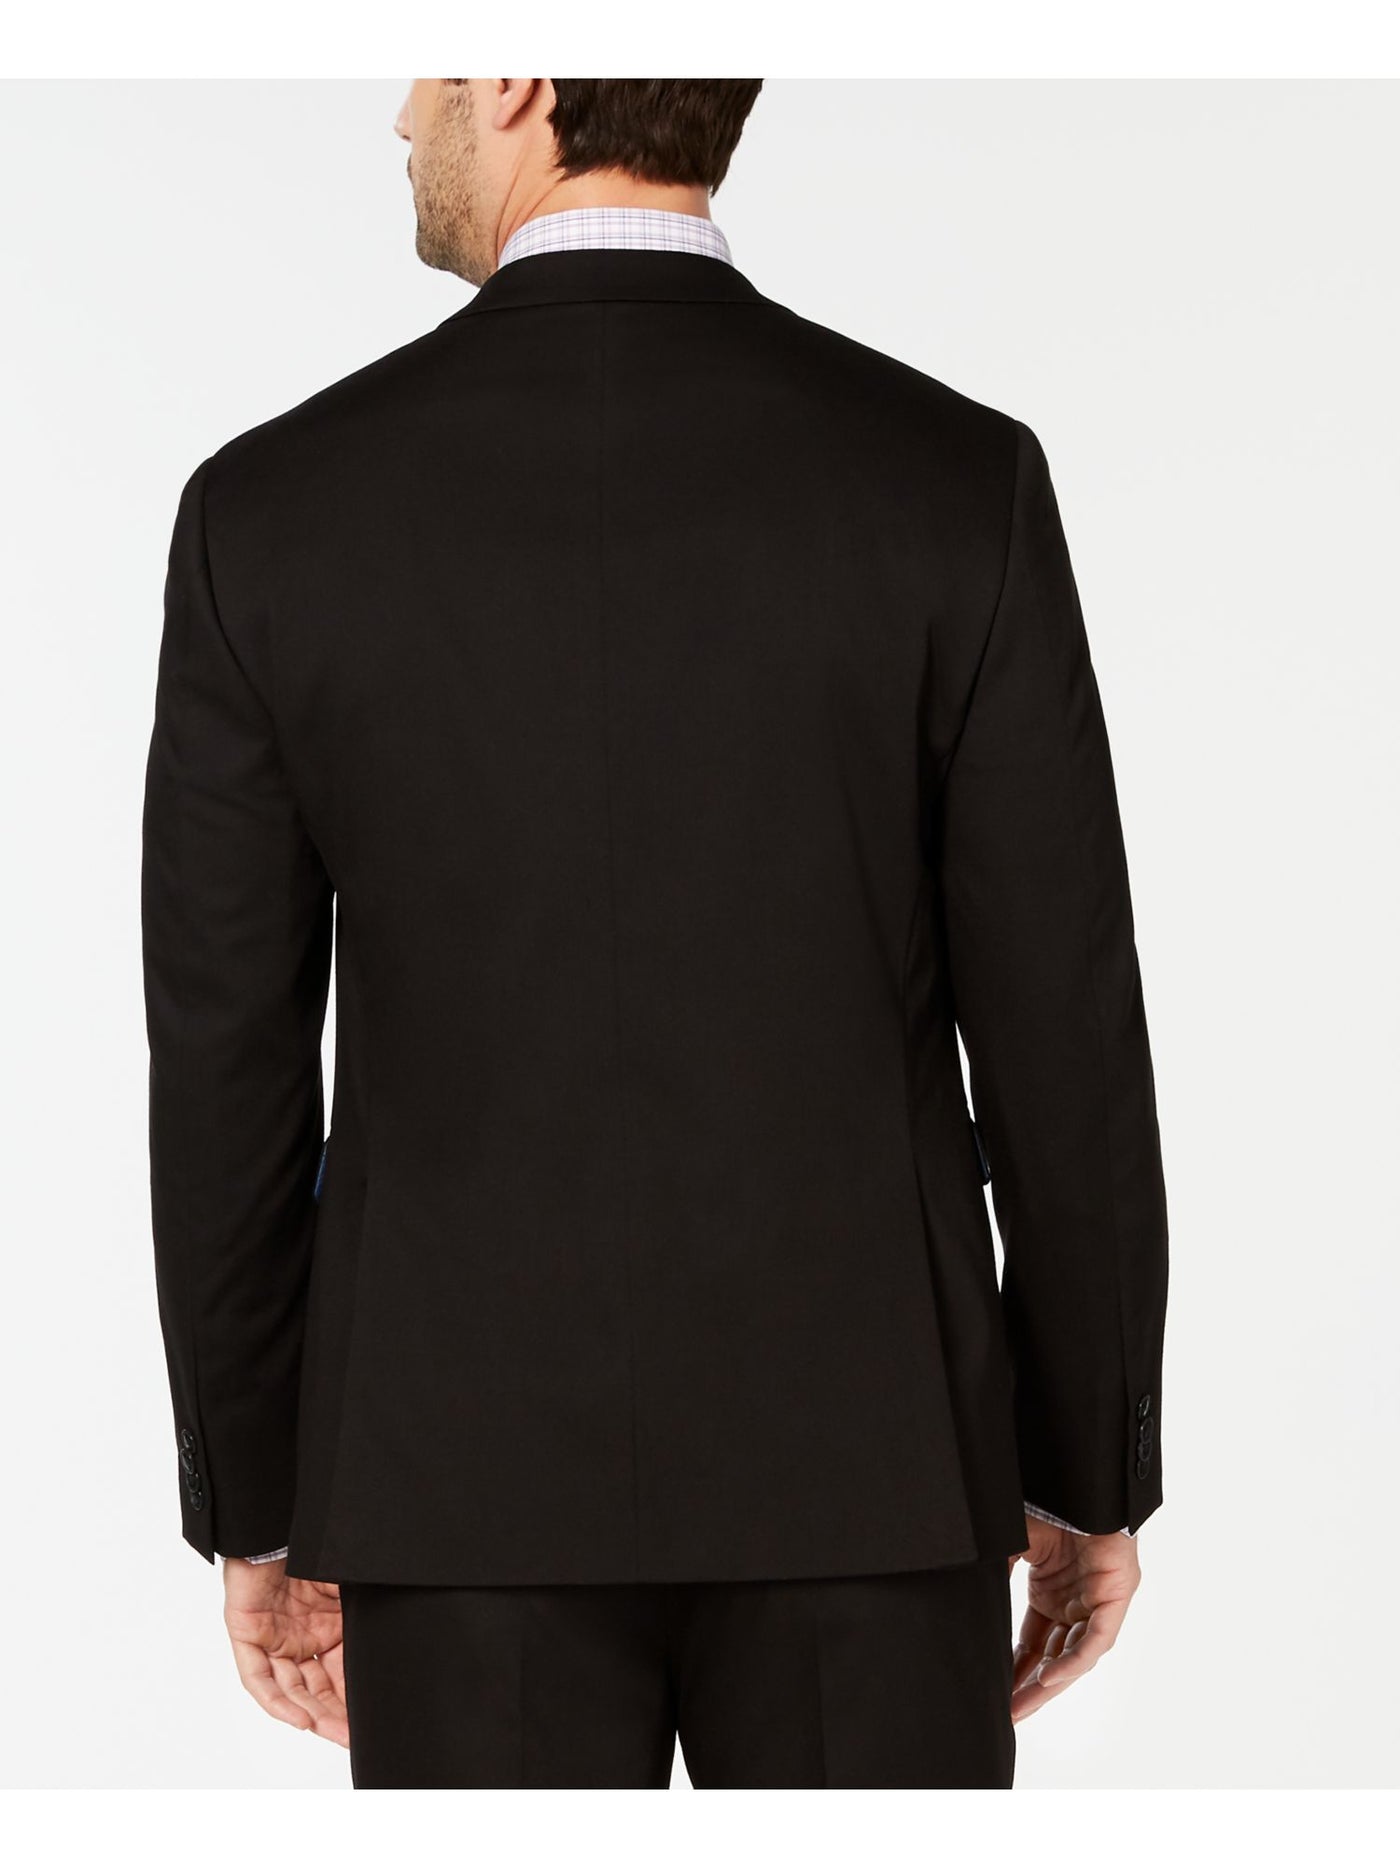 VINCE CAMUTO Mens Black Single Breasted, Stretch, Slim Fit Wrinkle Resistant Suit Separate Blazer Jacket 40R